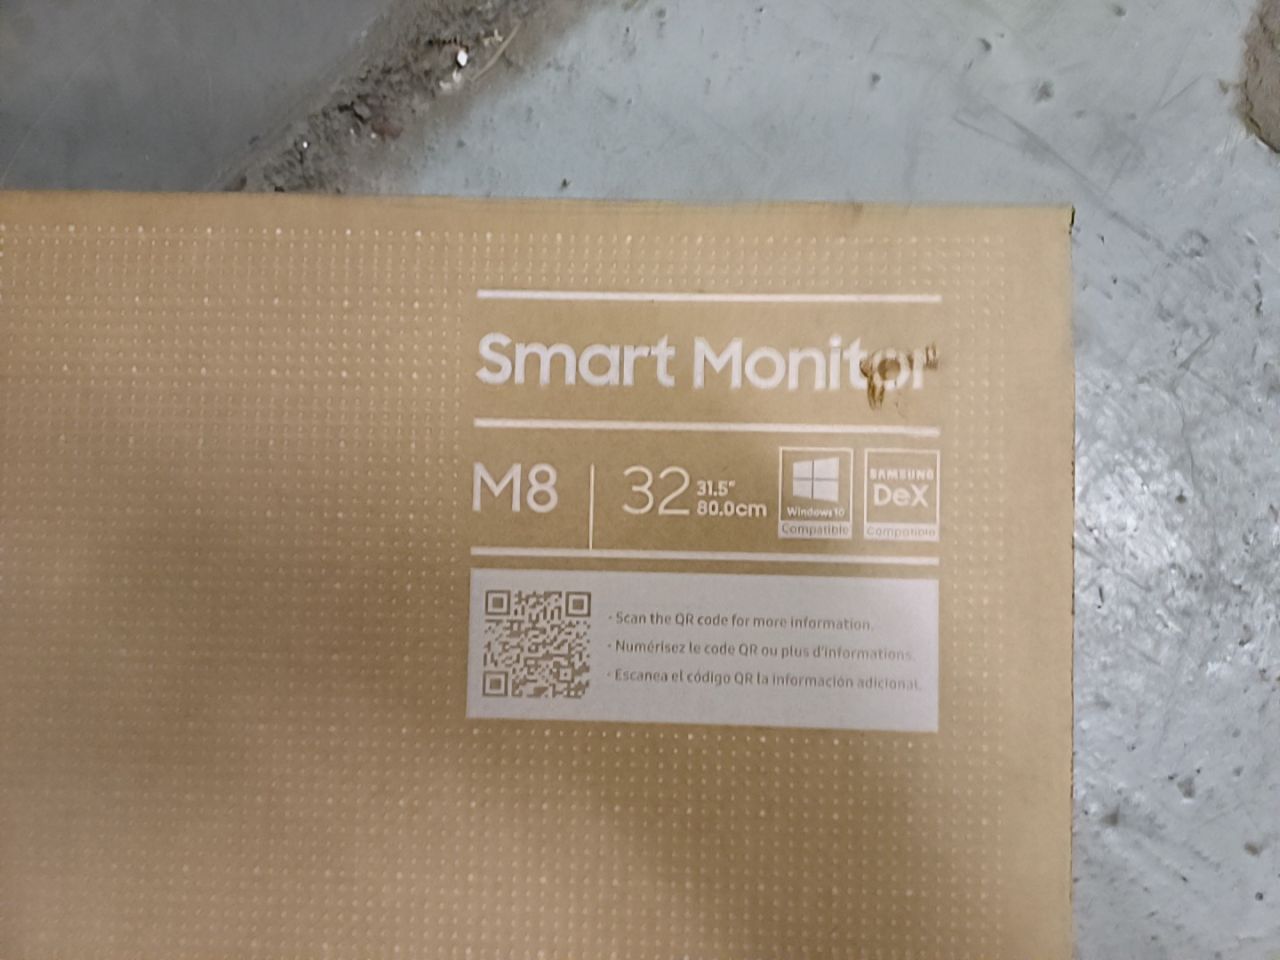 LCD monitor Samsung Smart Monitor M8 Warm White